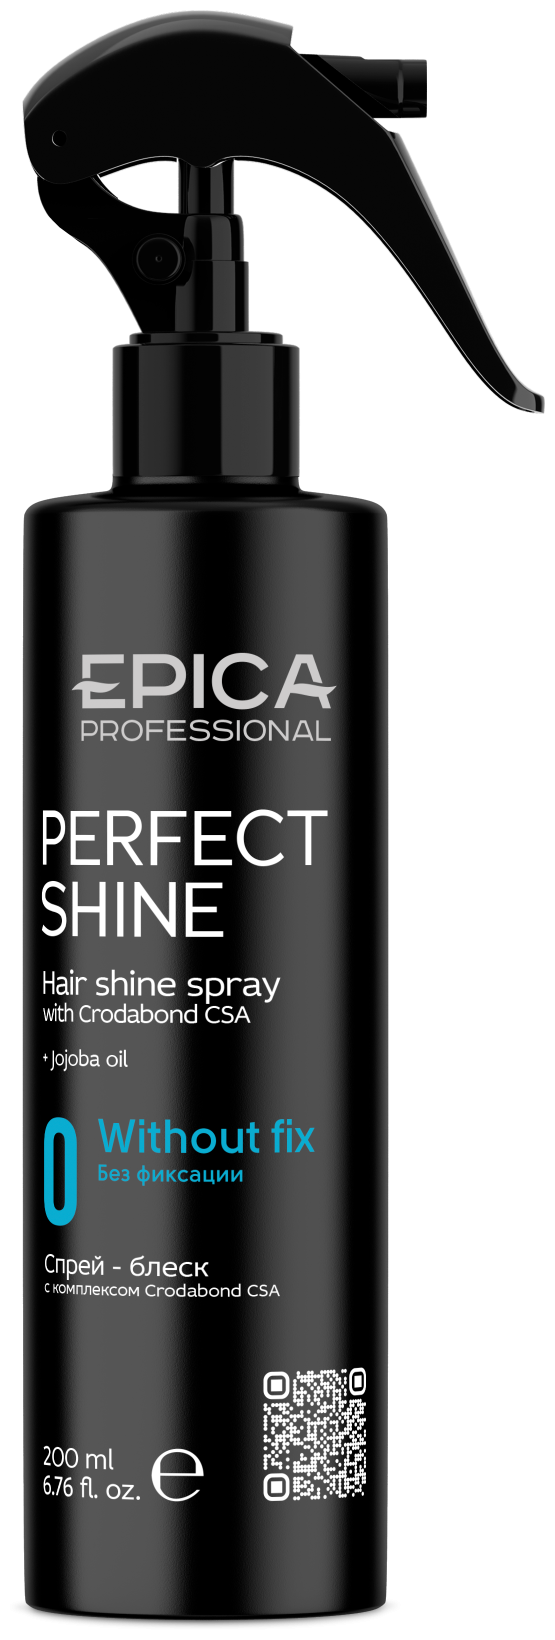 EPICA PROFESSIONAL Perfect Shine Спрей-блеск с комплексом Crodabond CSA, 200 мл